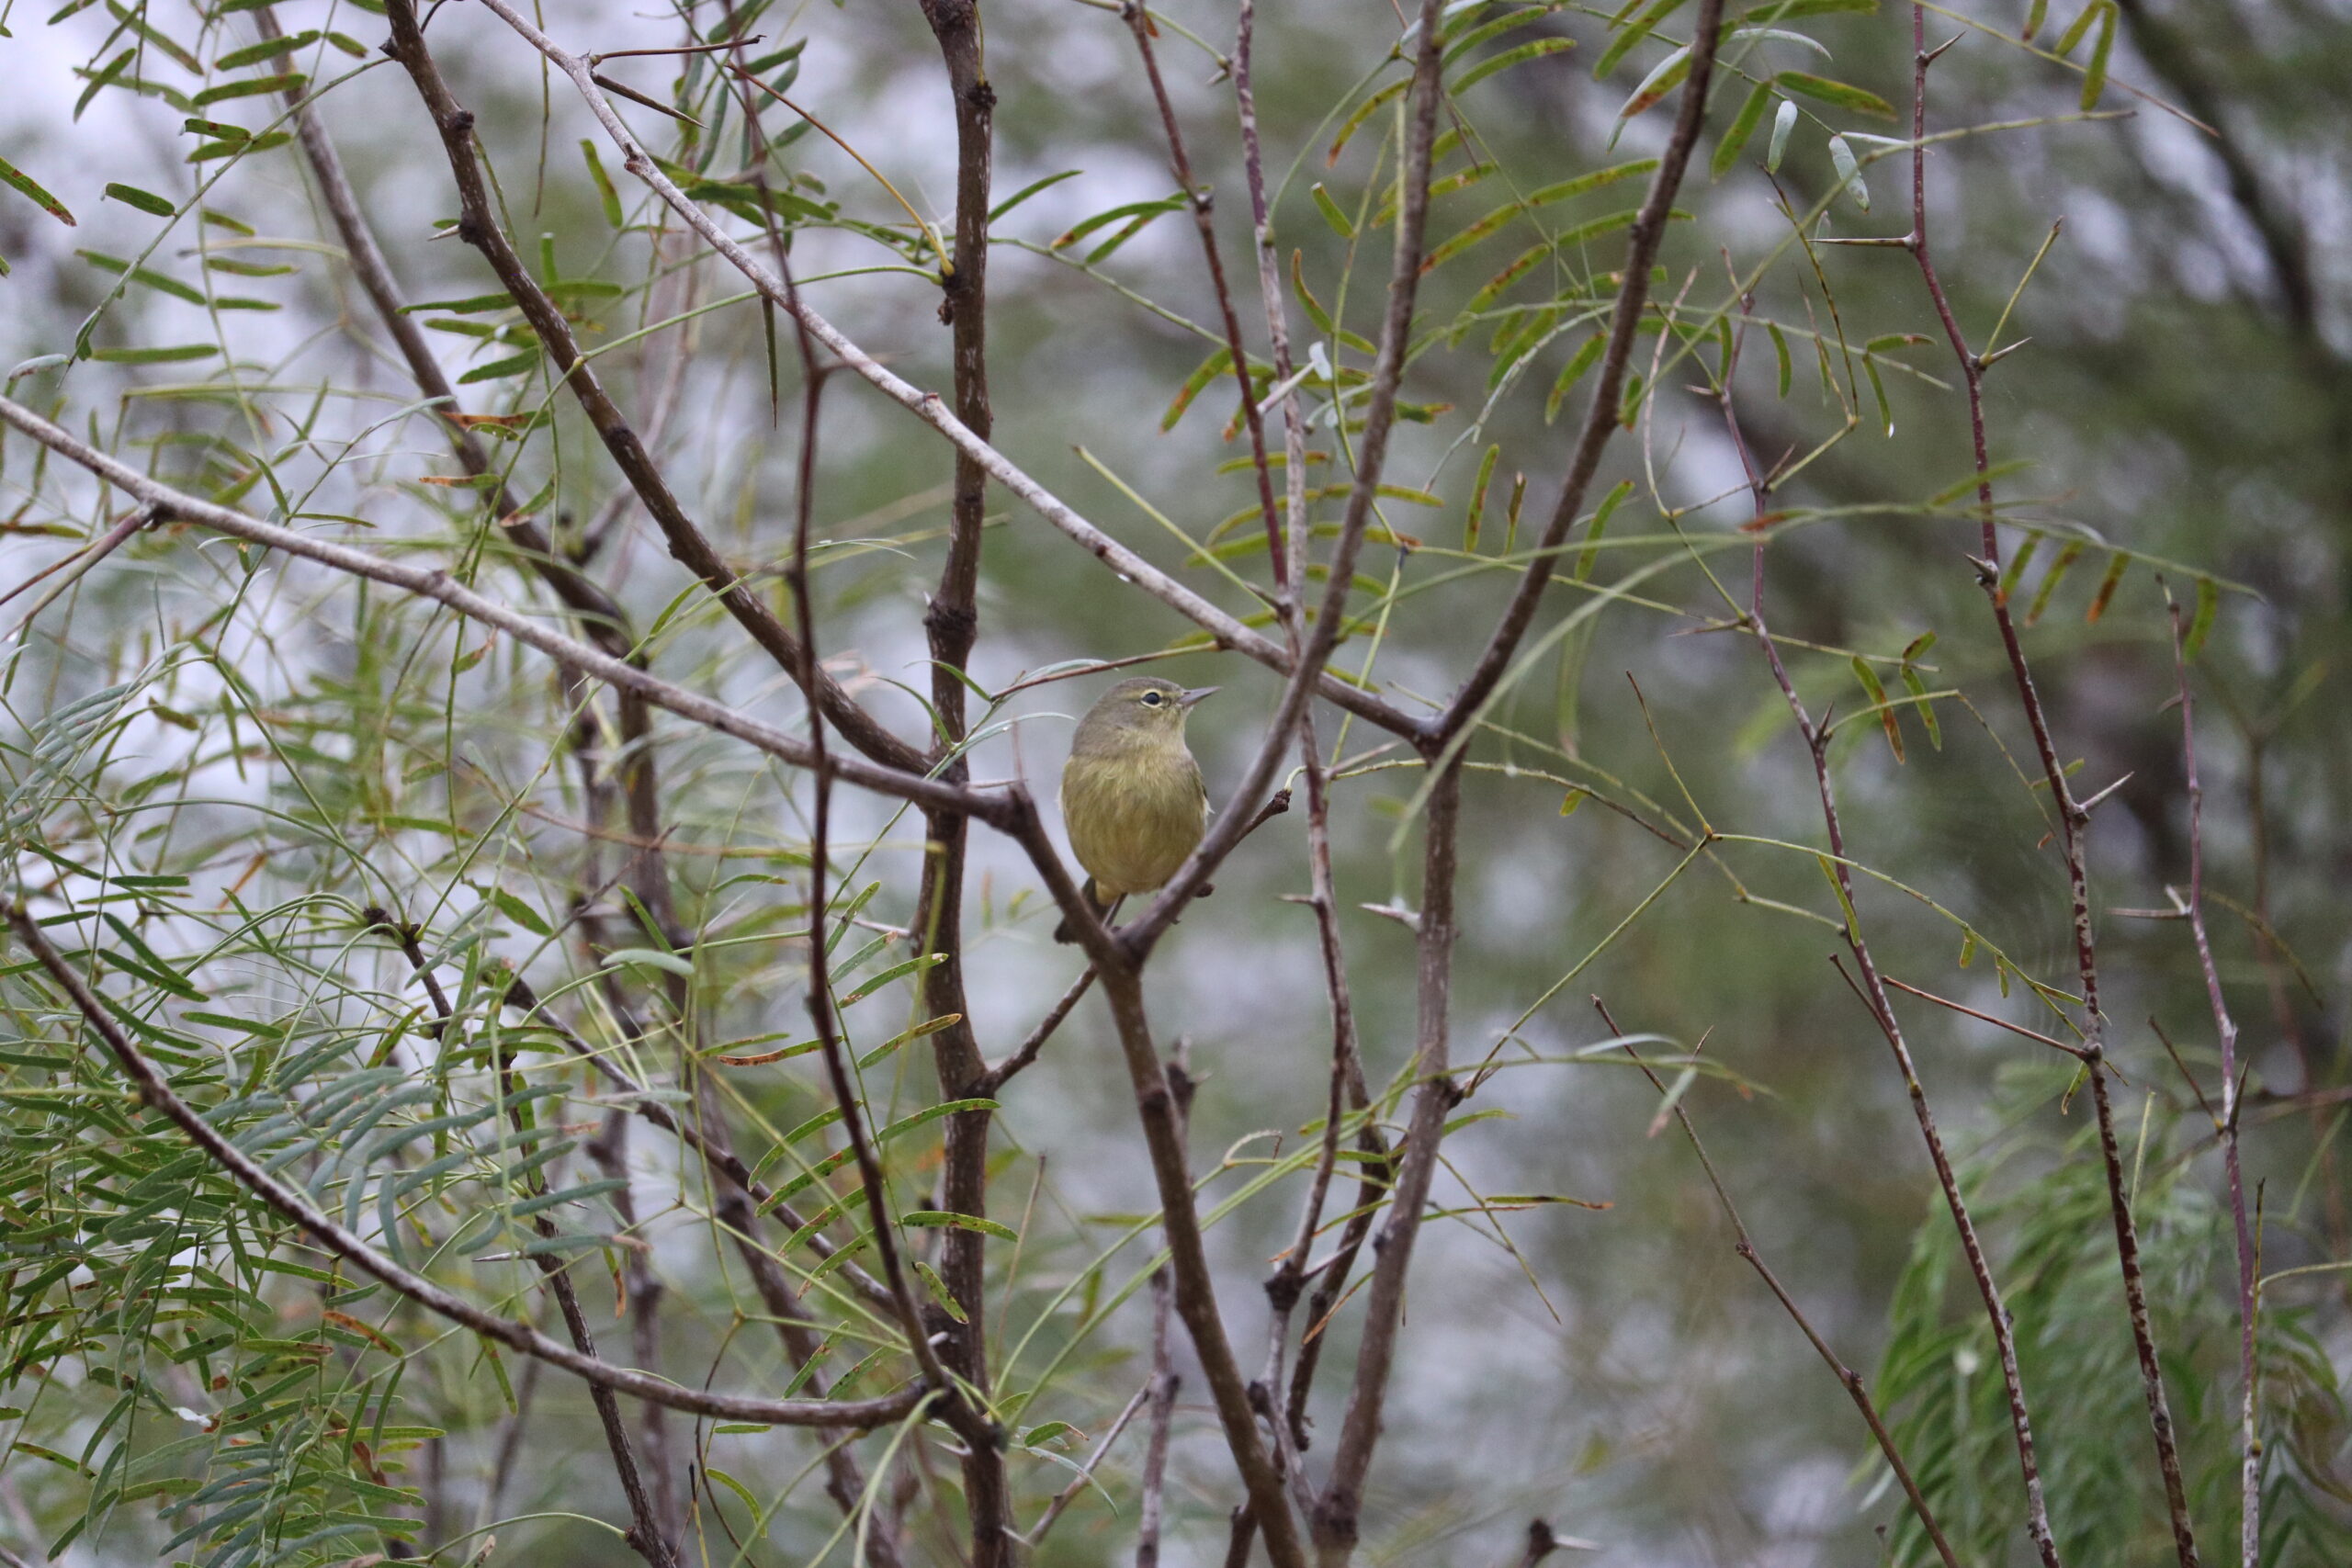 Orange Crowned Warbler in a bush